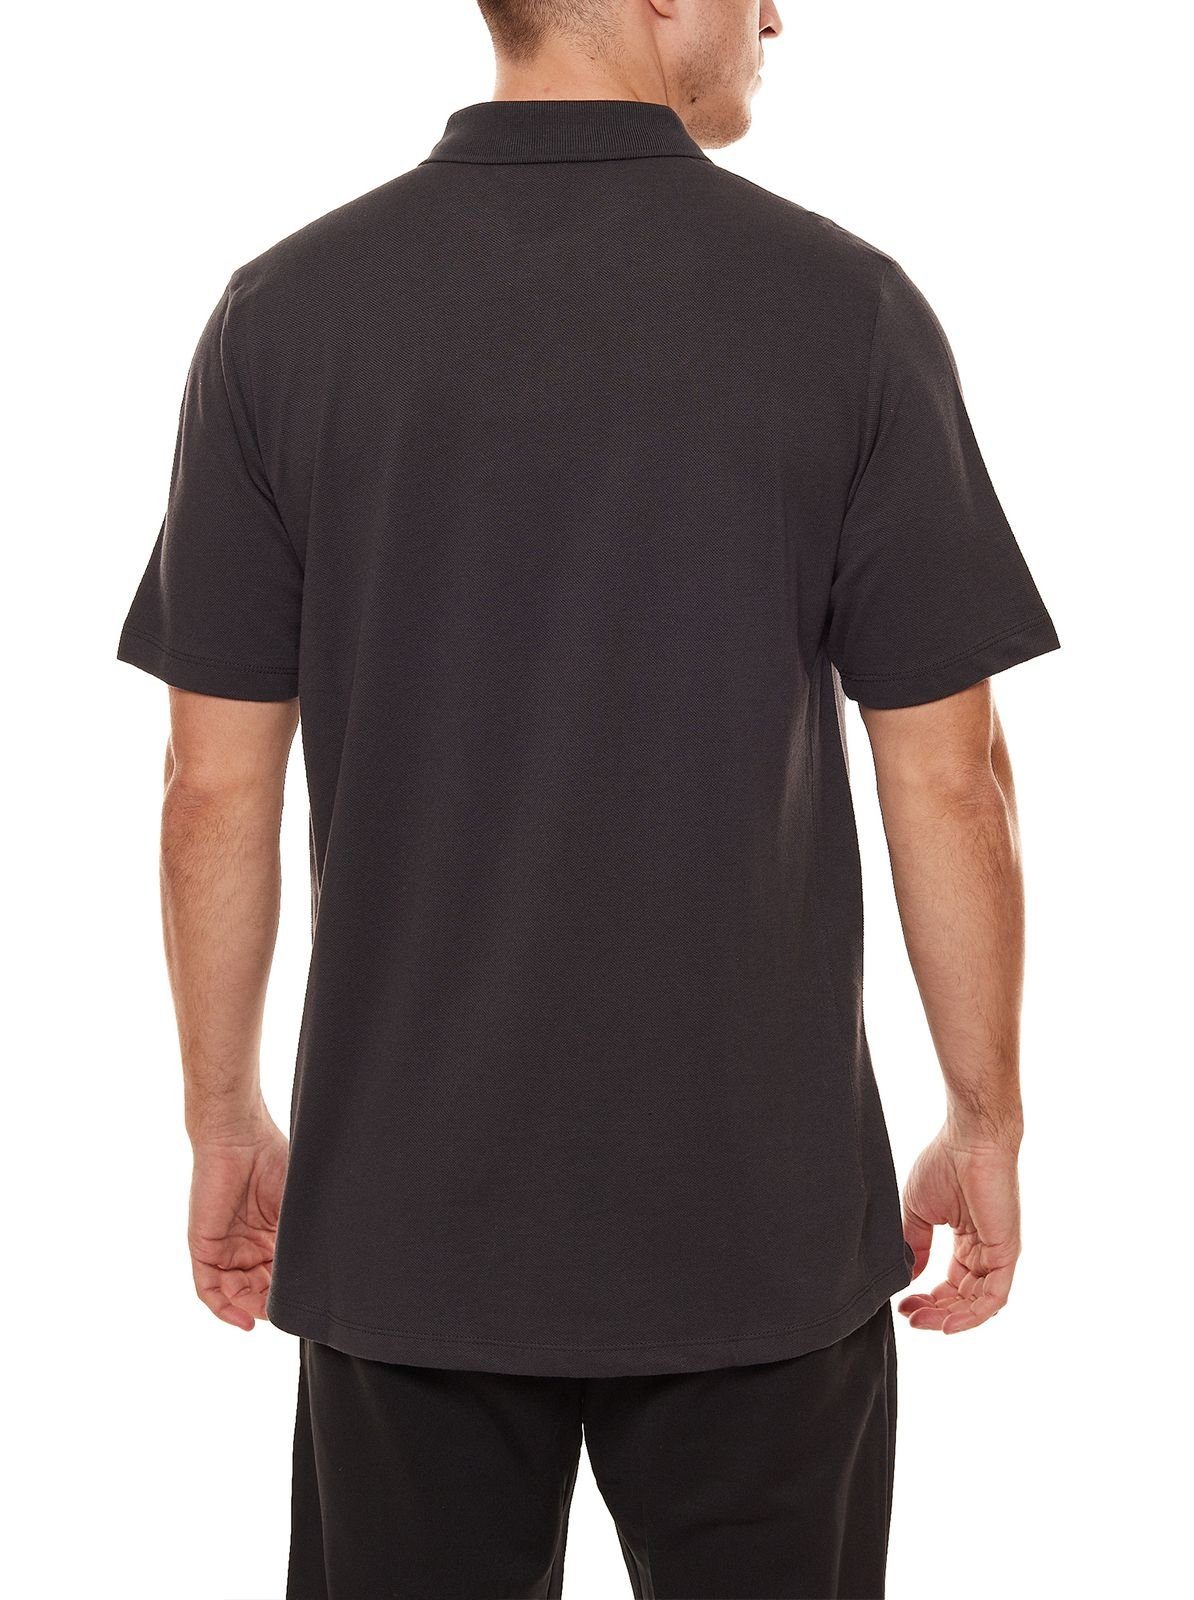 Umbro Rundhalsshirt umbro Golf-Shirt Dunkelgrau Essential Herren komfortables Polohemd Polo-Shirt UMTM0323-825 Club